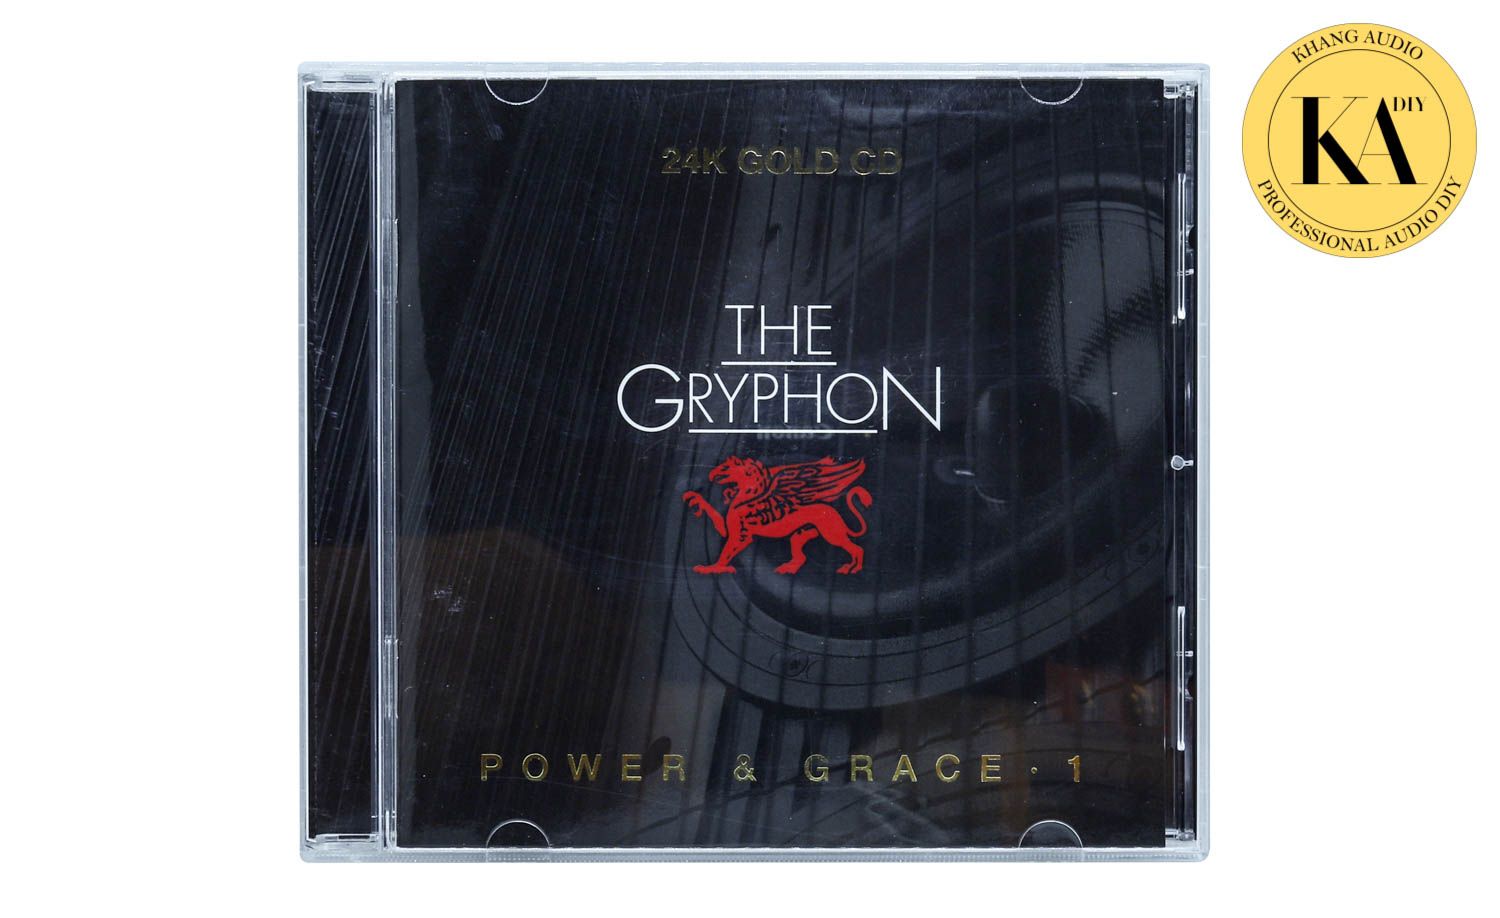 The Gryphon - Power & Grace 1 CD29